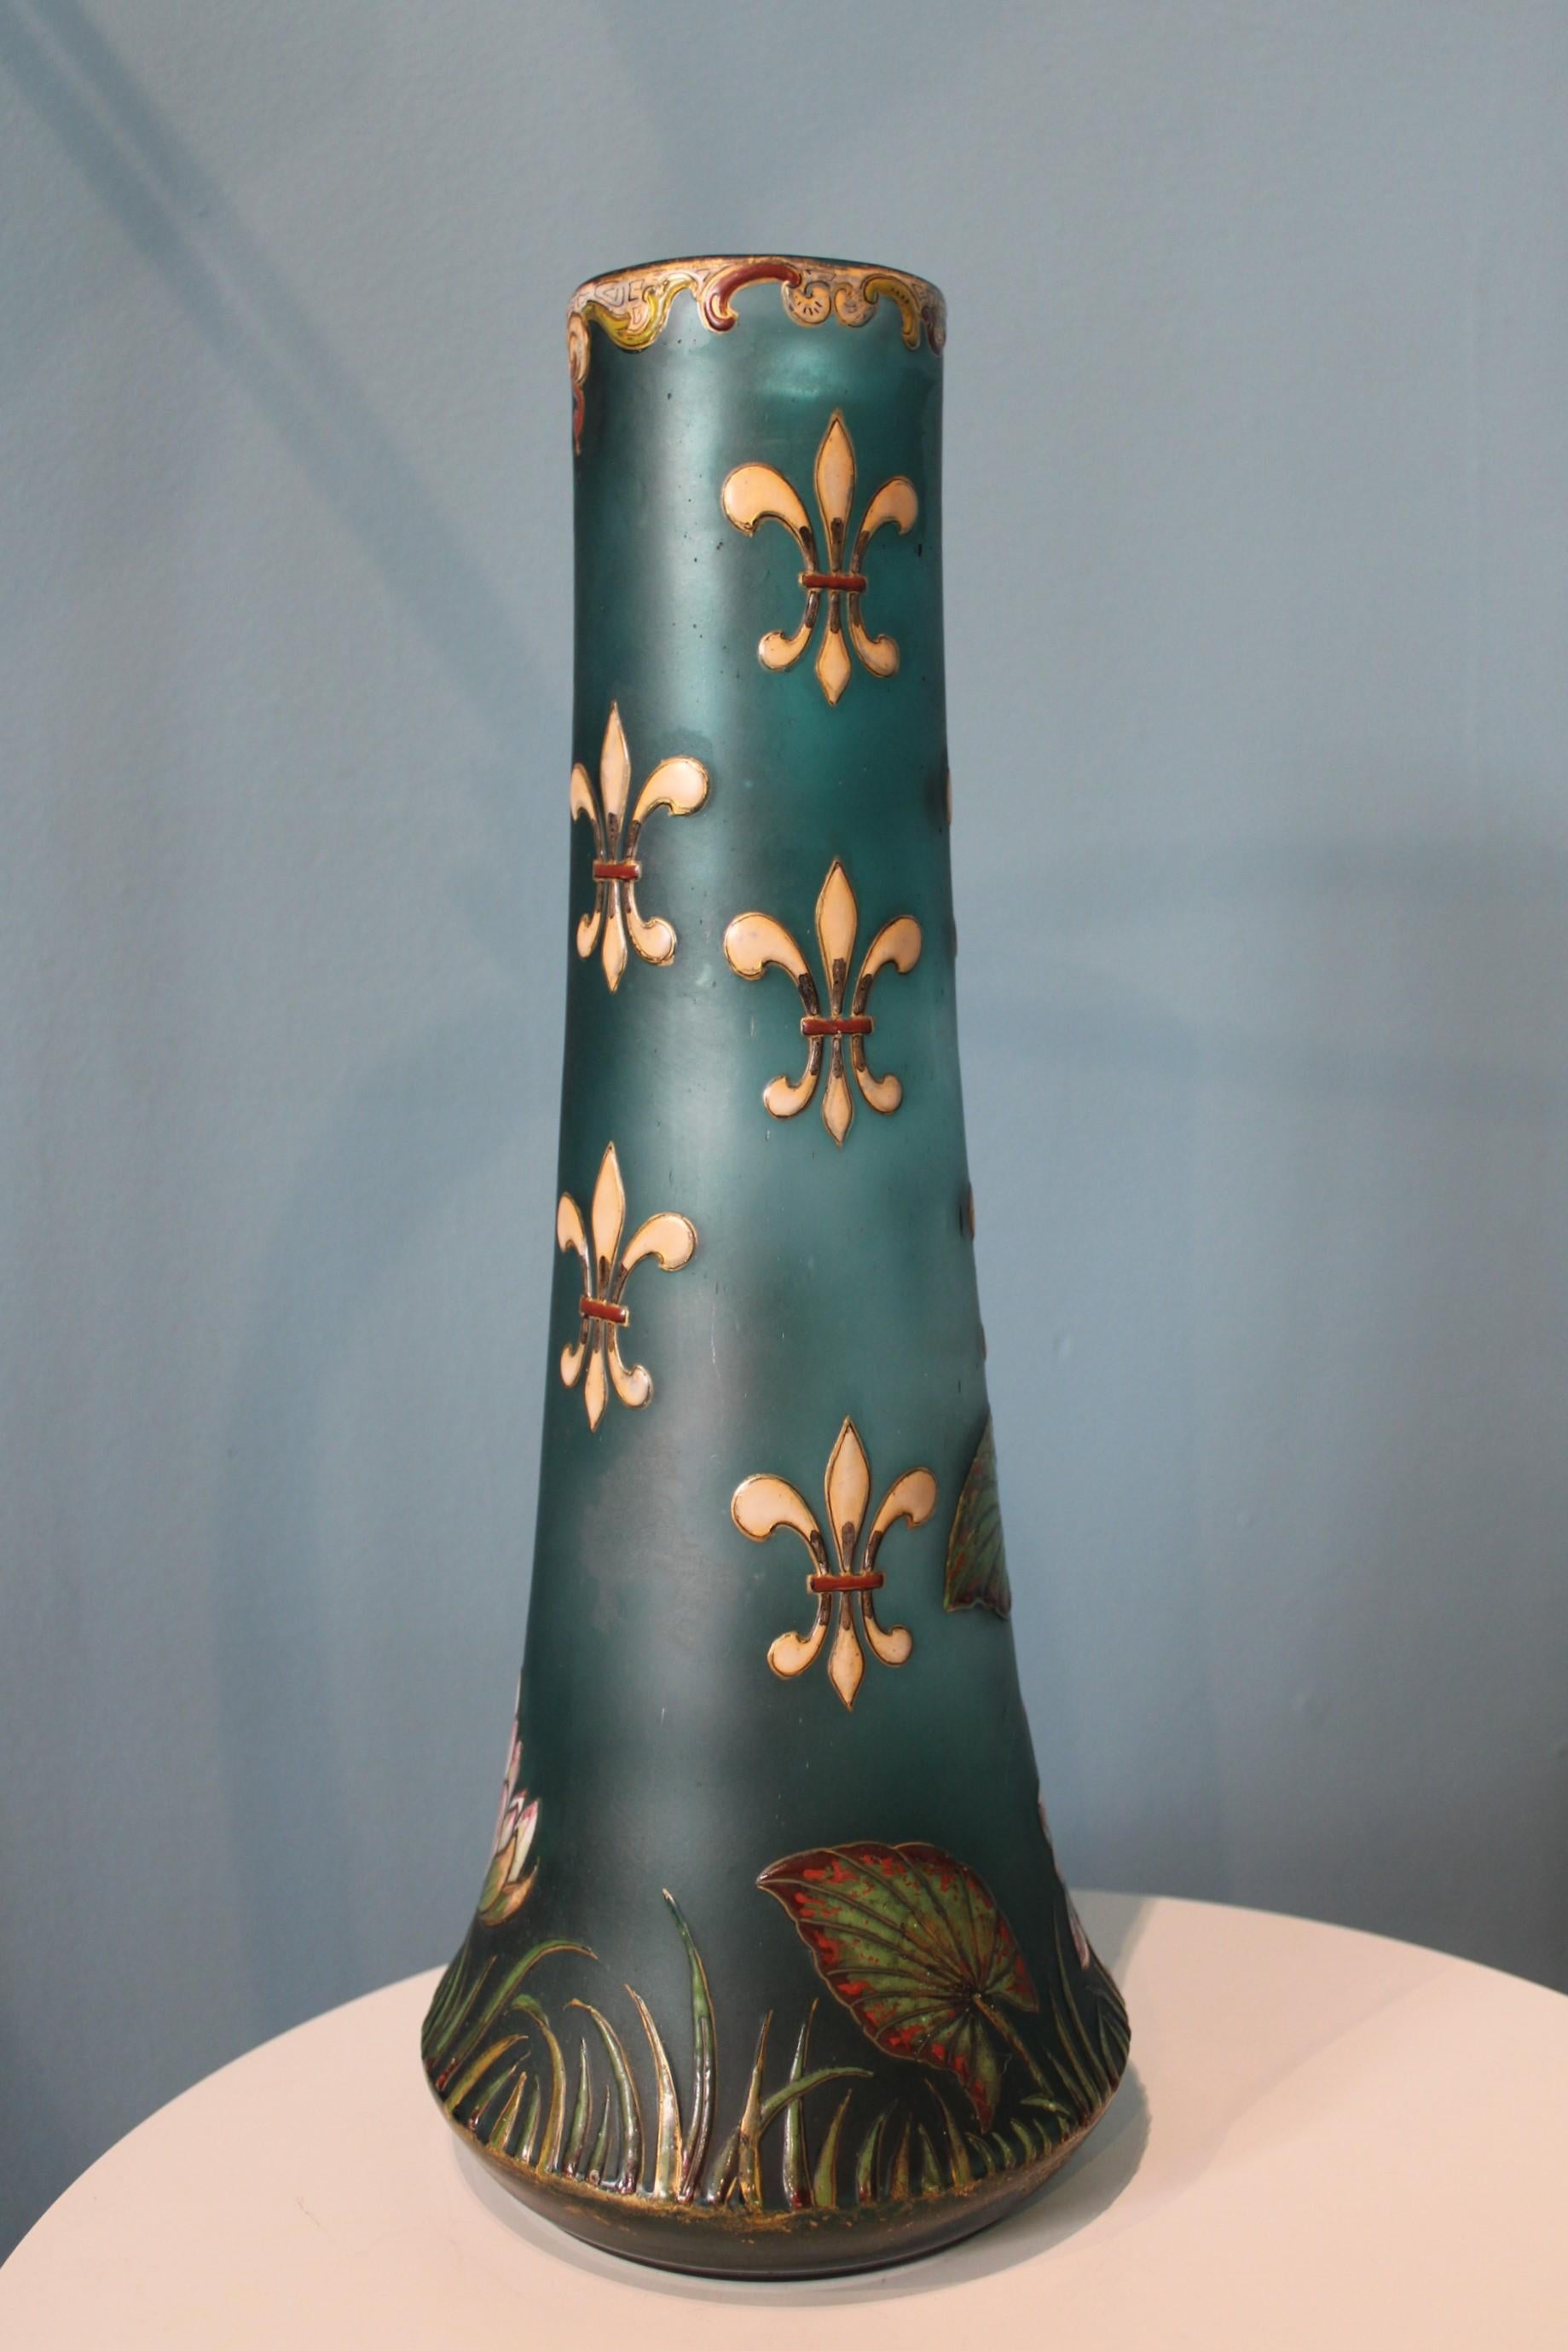 Art Nouveau Burgun, Schverer & Cie glass vase, France